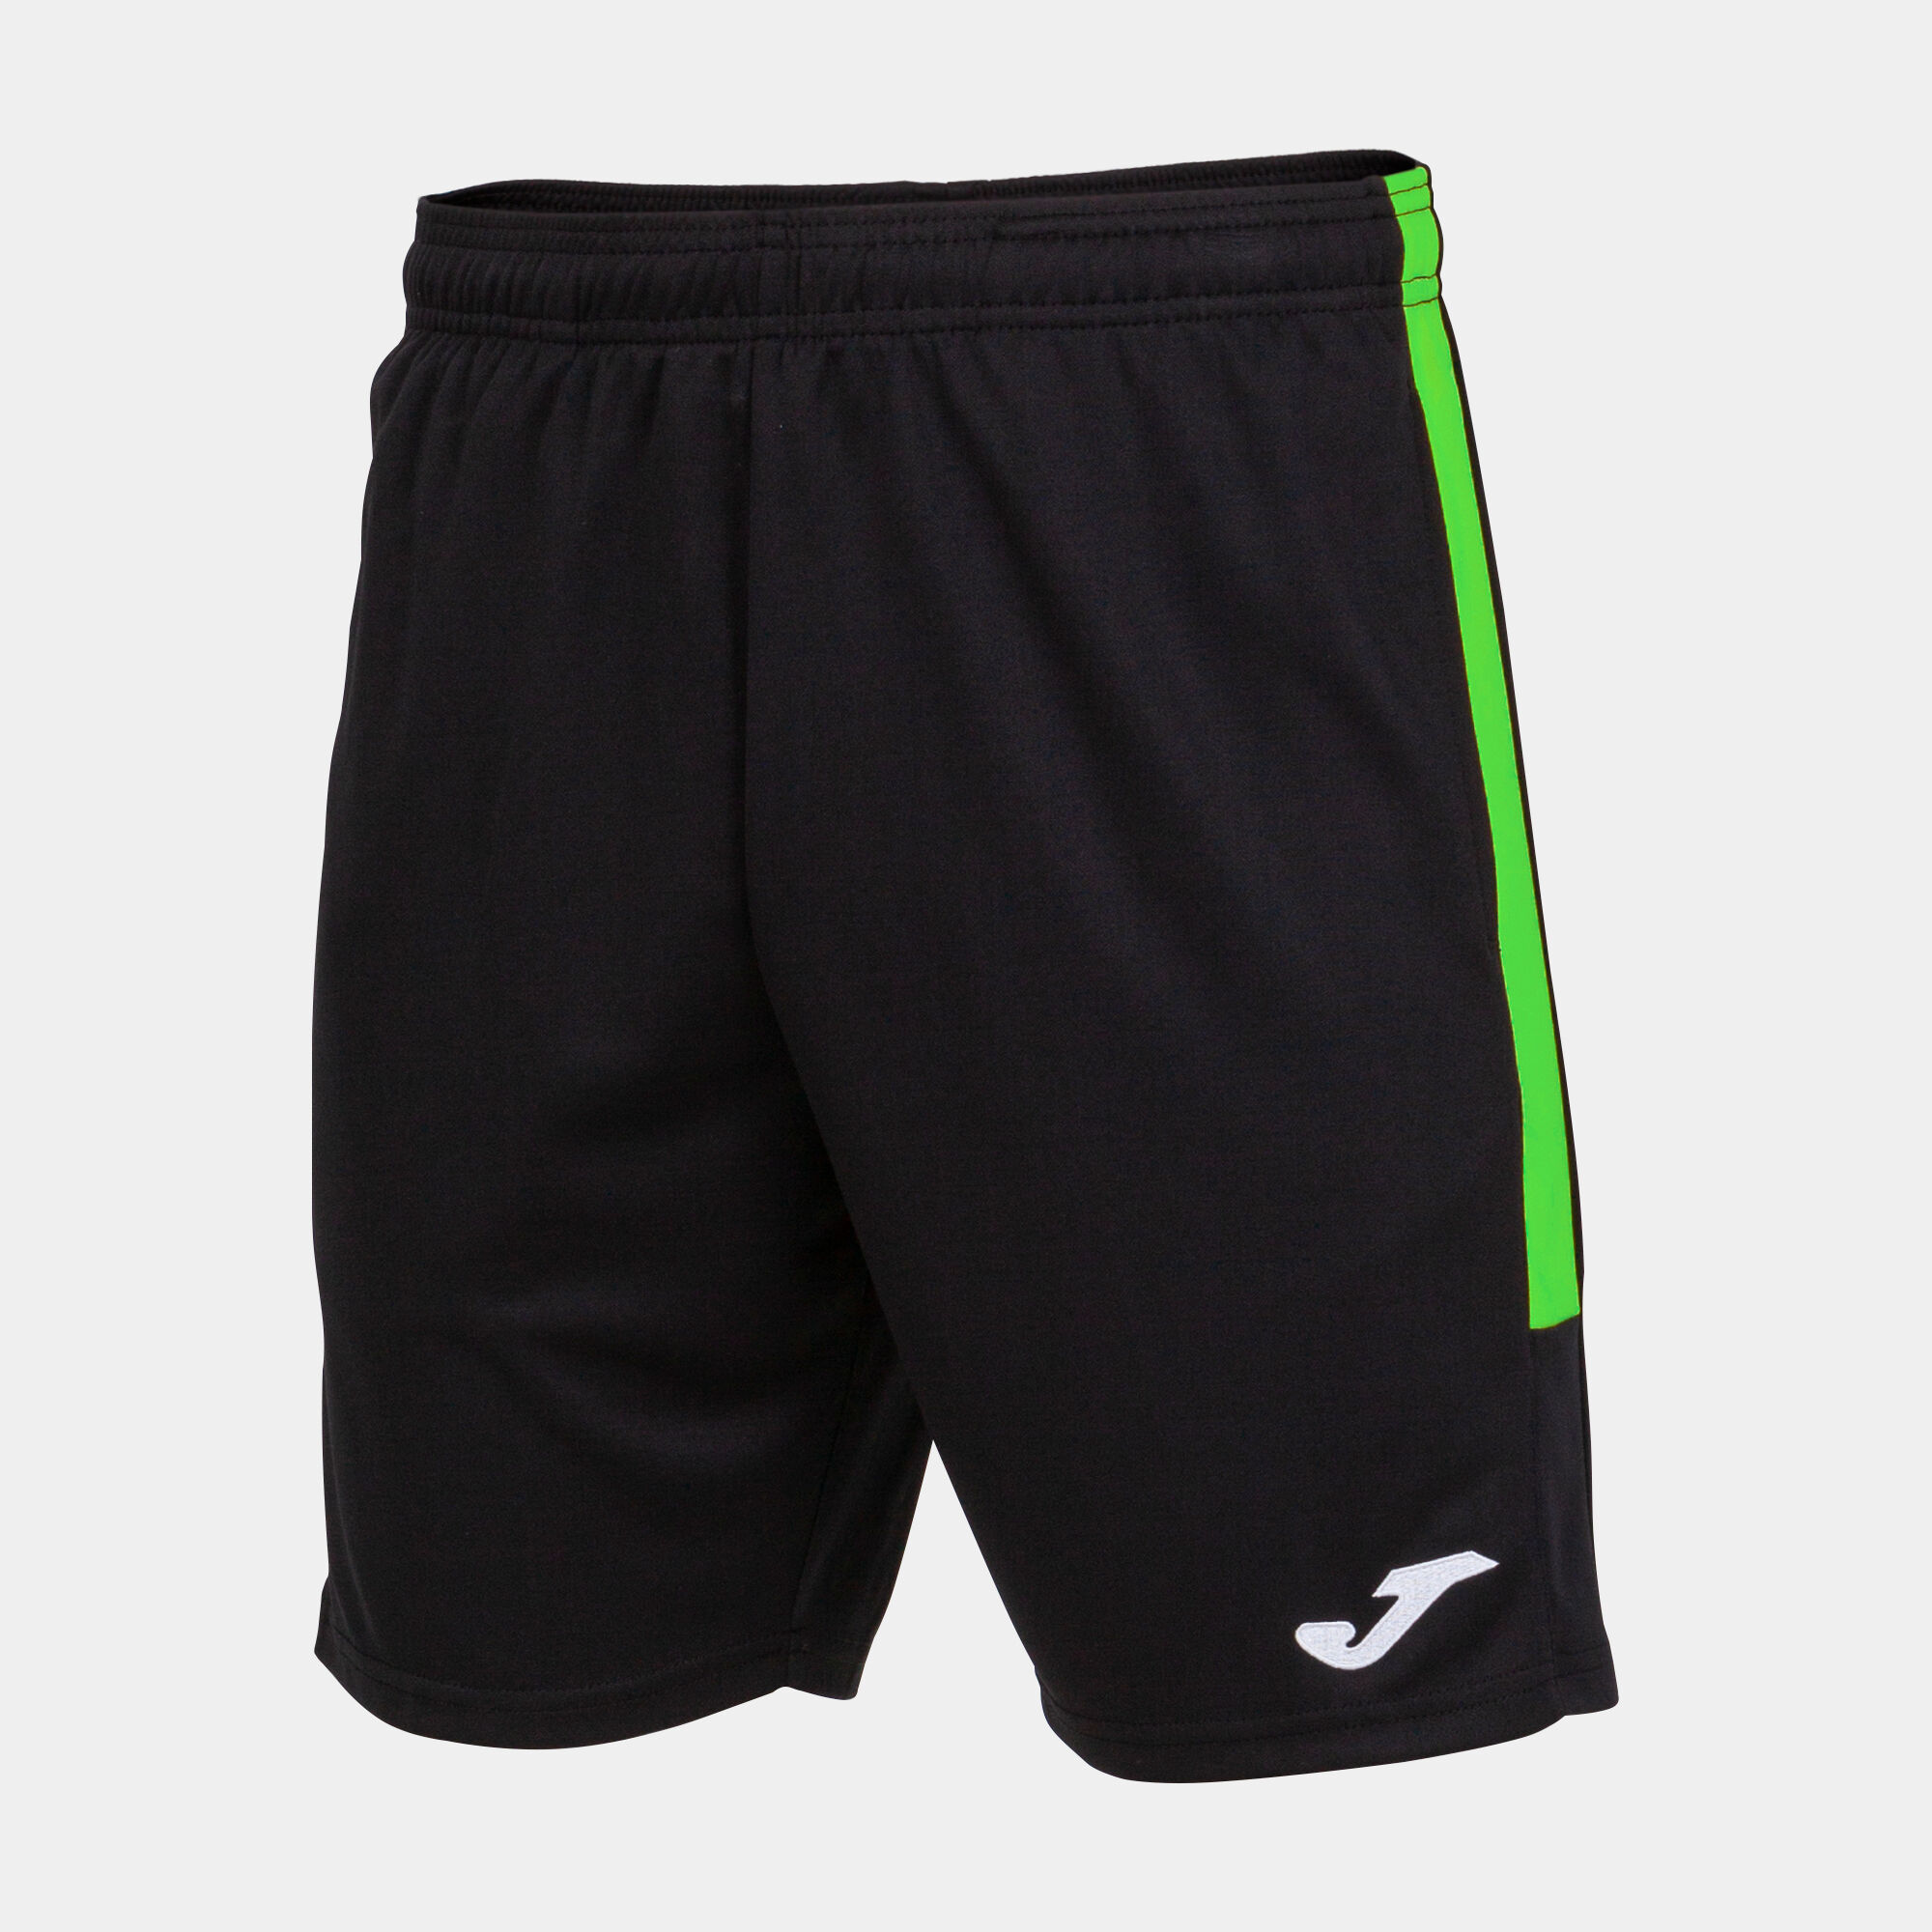 Bermuda shorts man Eco Championship black fluorescent green